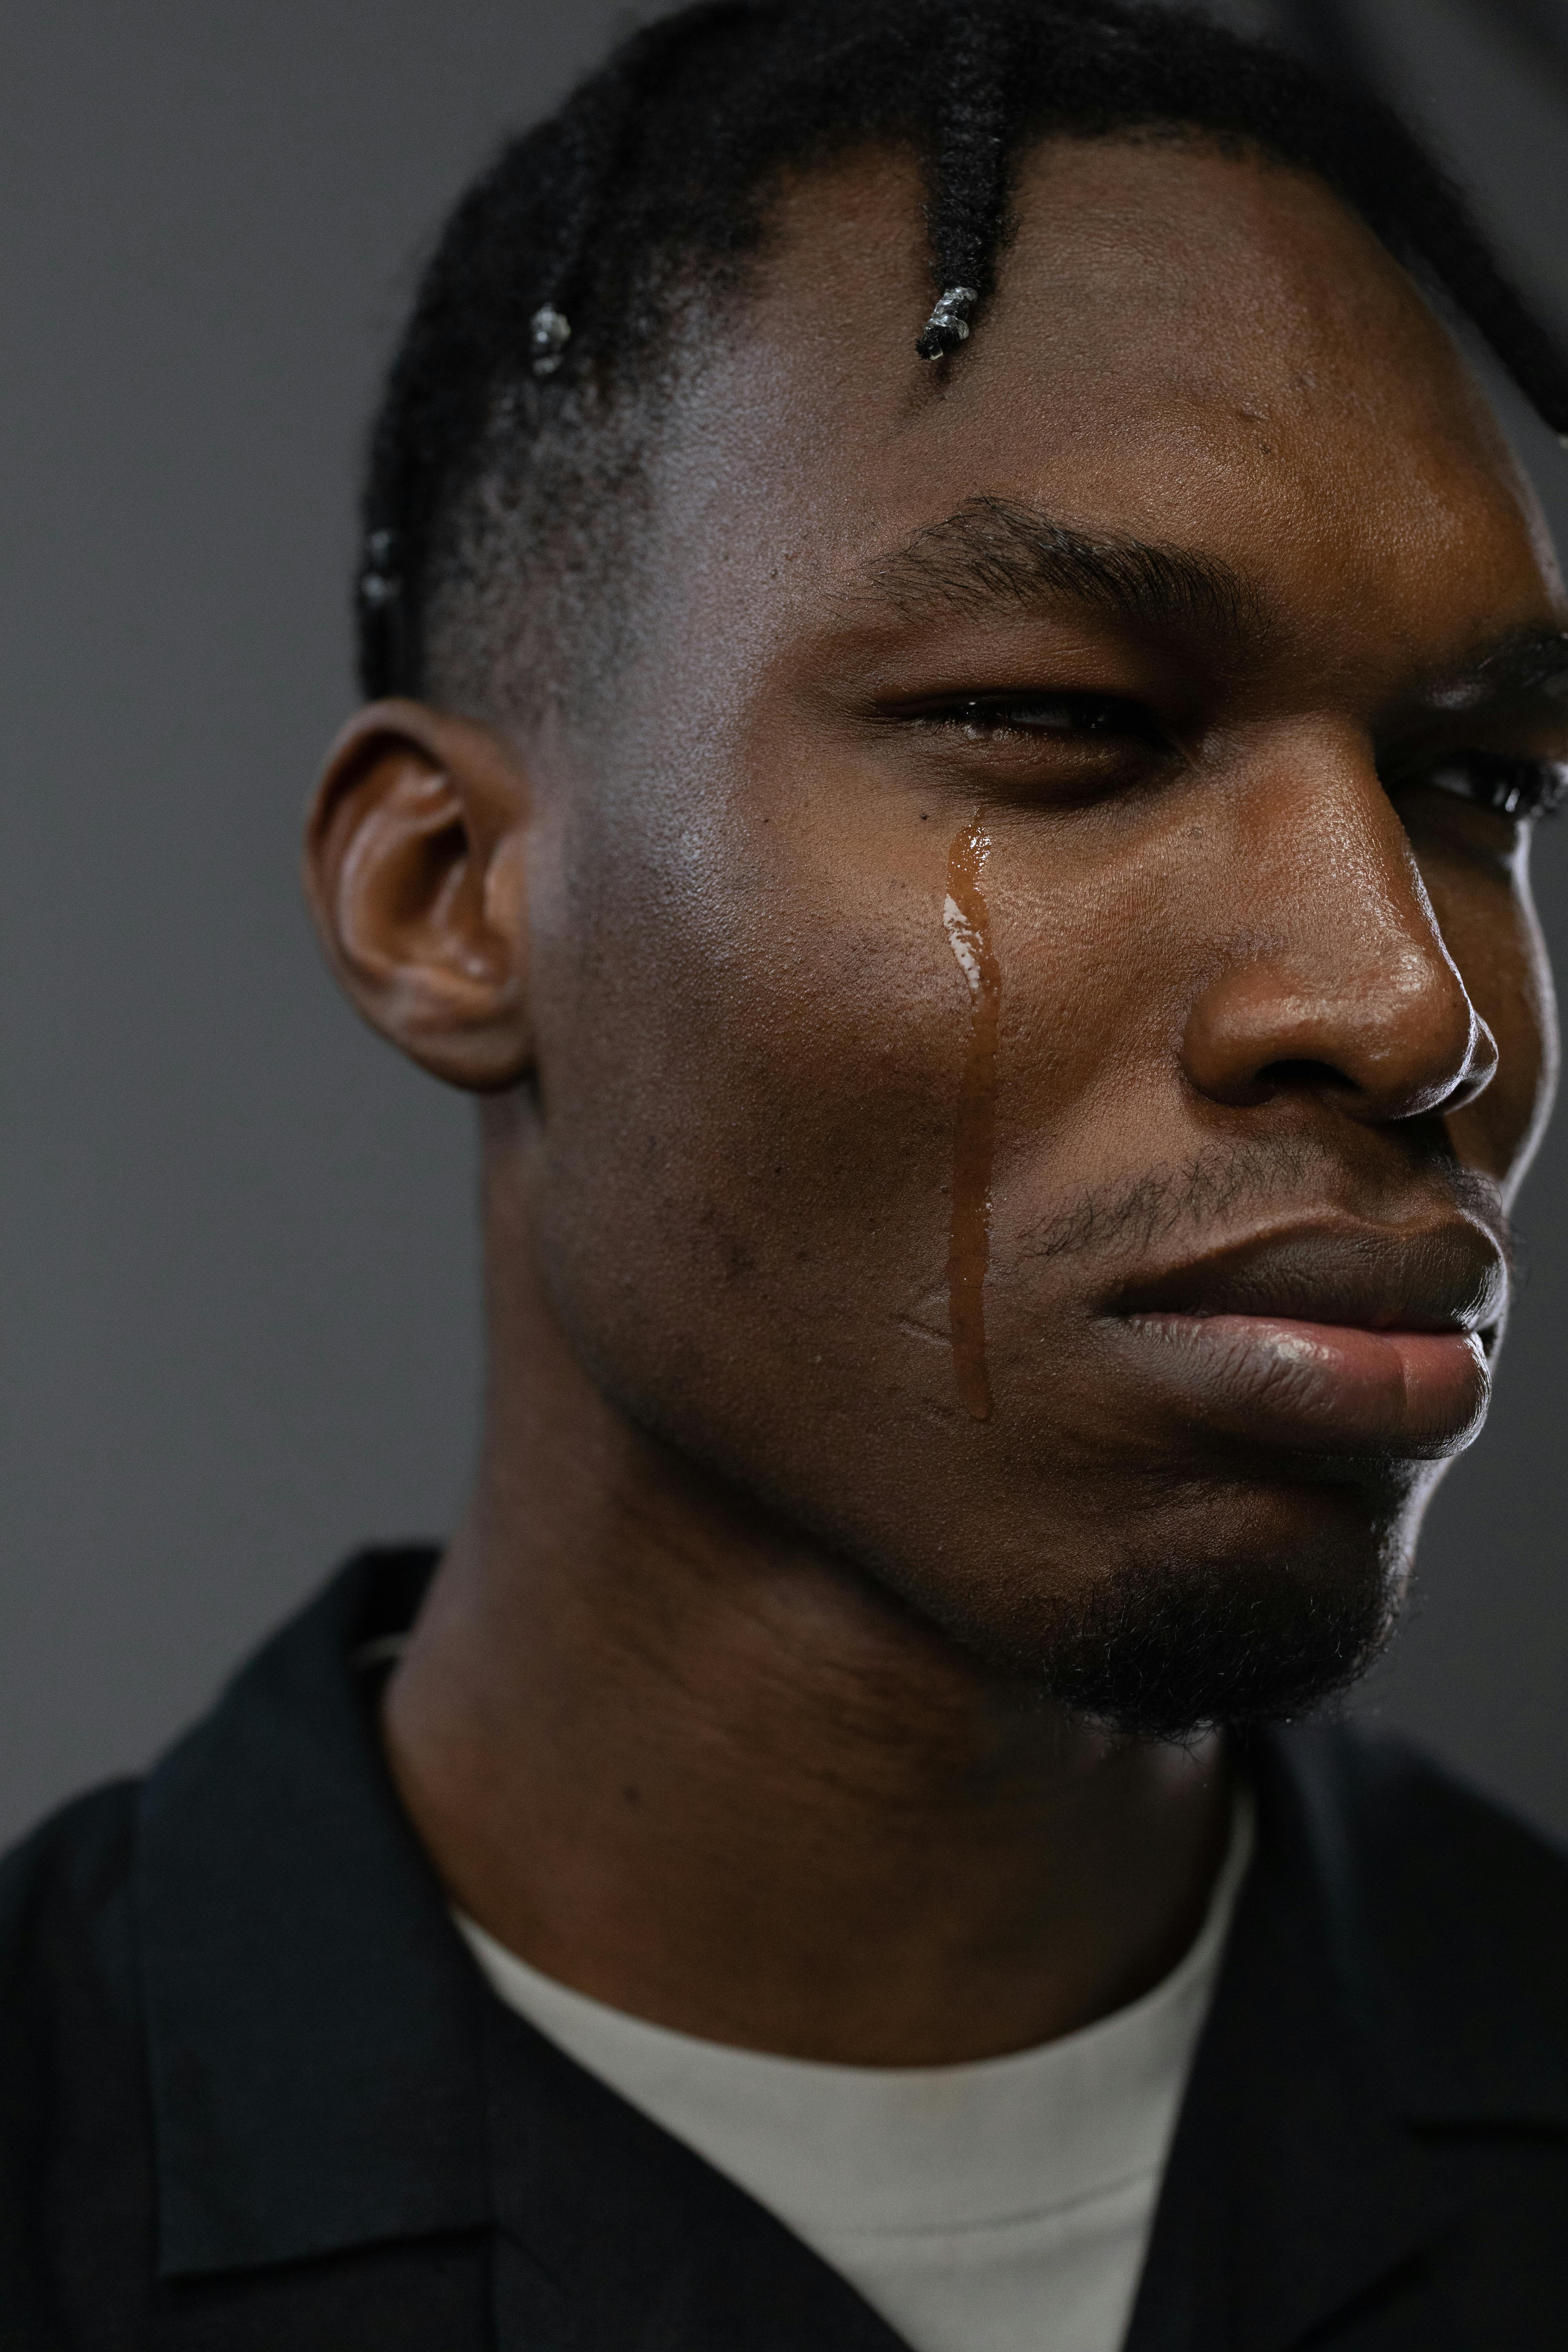 A crying man | Source: Pexels